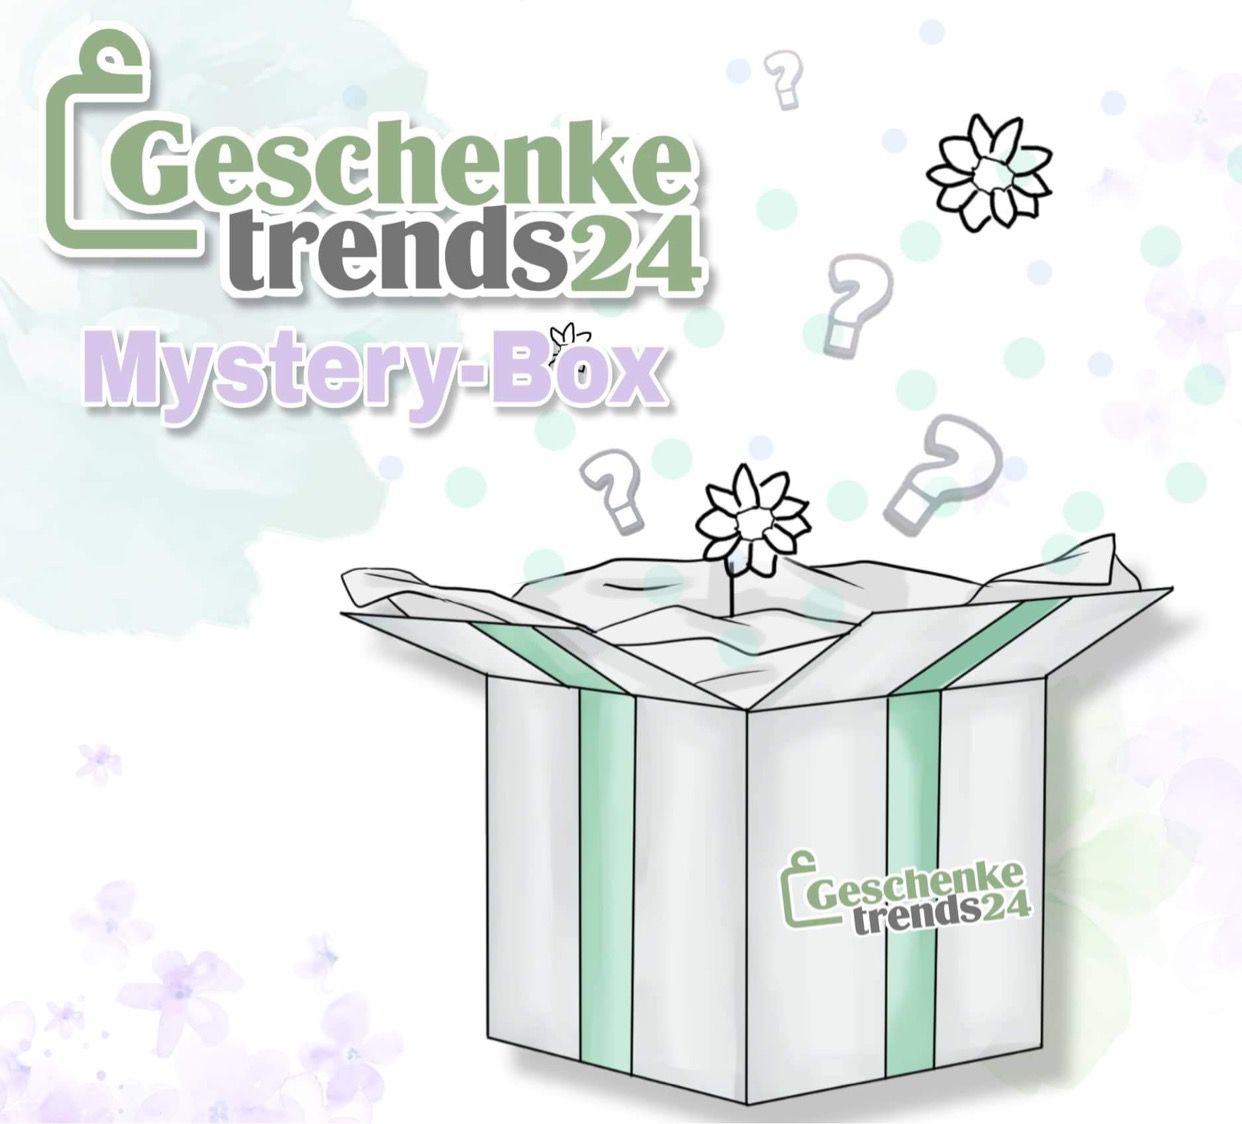  4. MYSTERY-BOX  -  gemischt